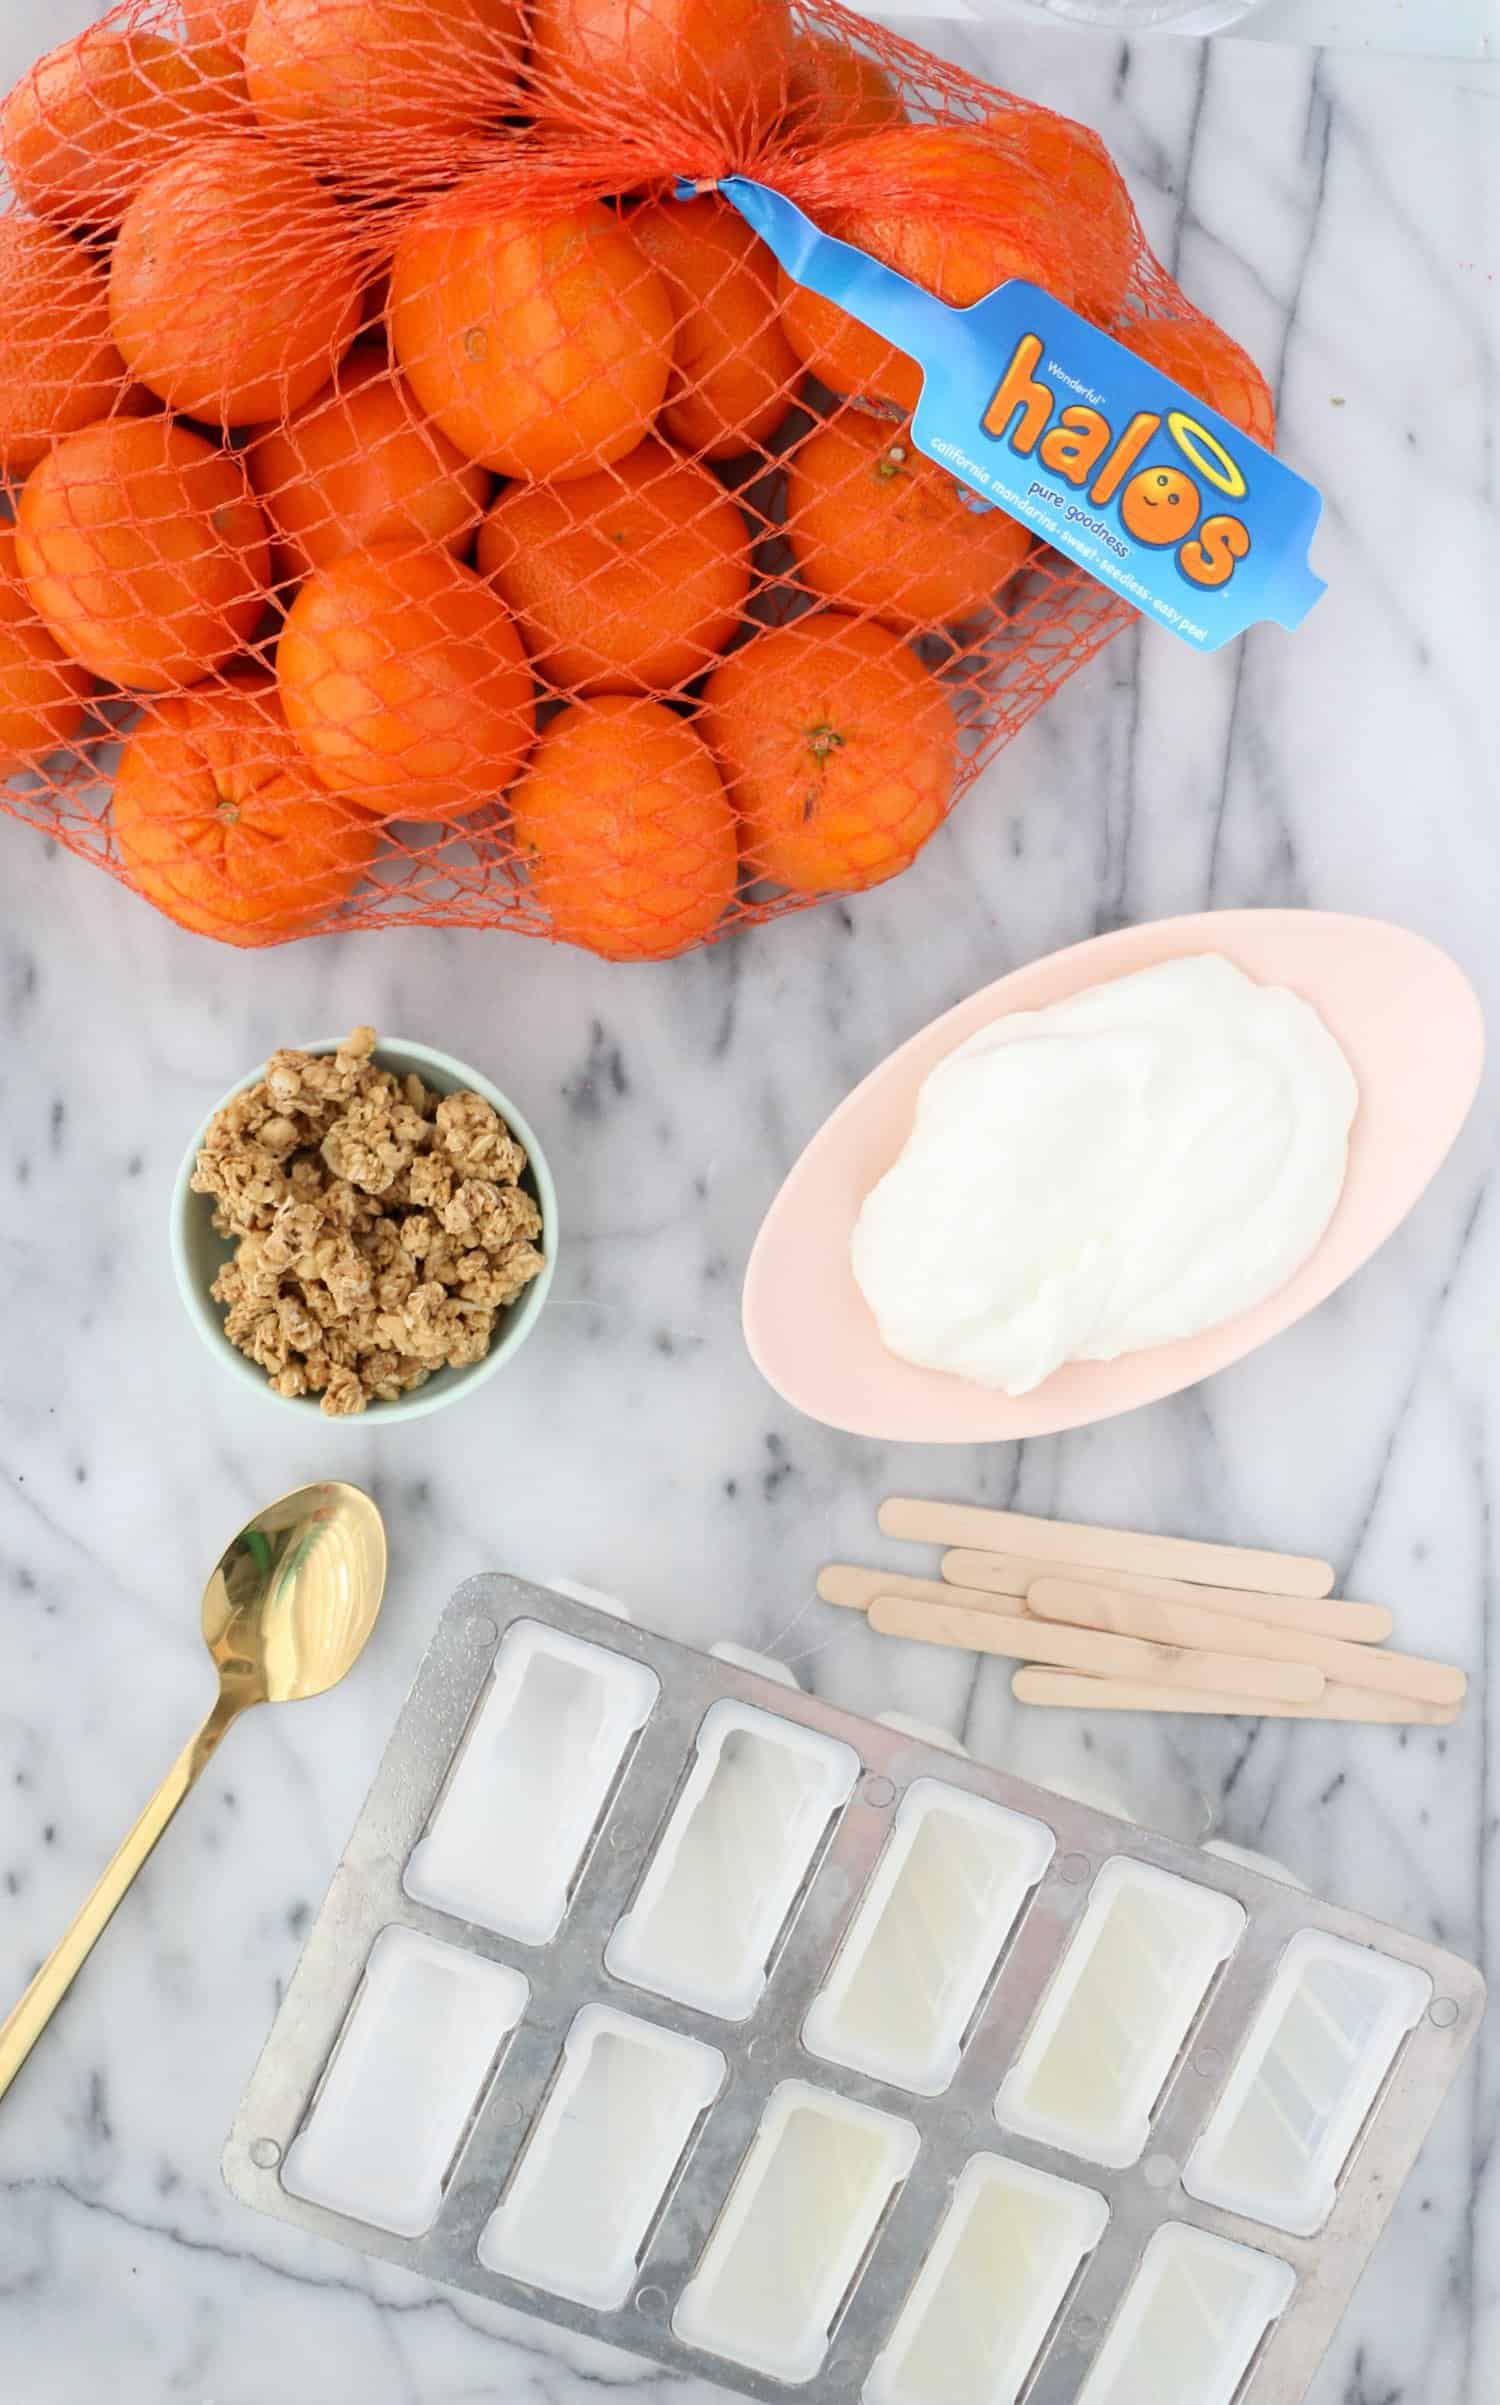 Make-Your-Own-Healthy-Orange-Cream-Popsciles-5